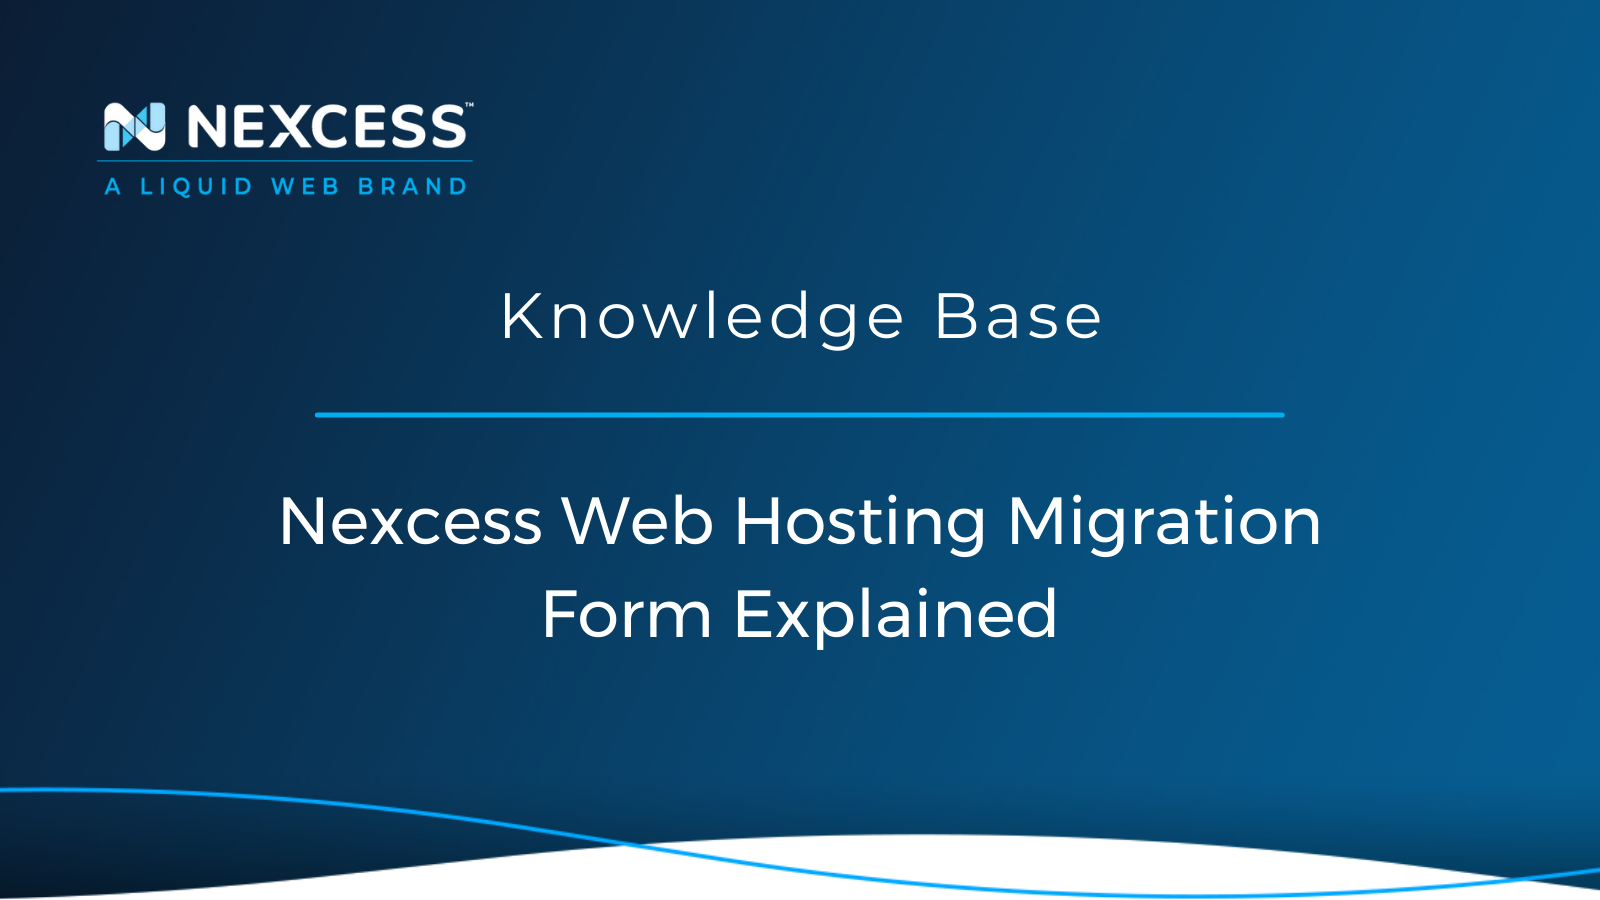 Nexcess Web Hosting Migration Form Explained